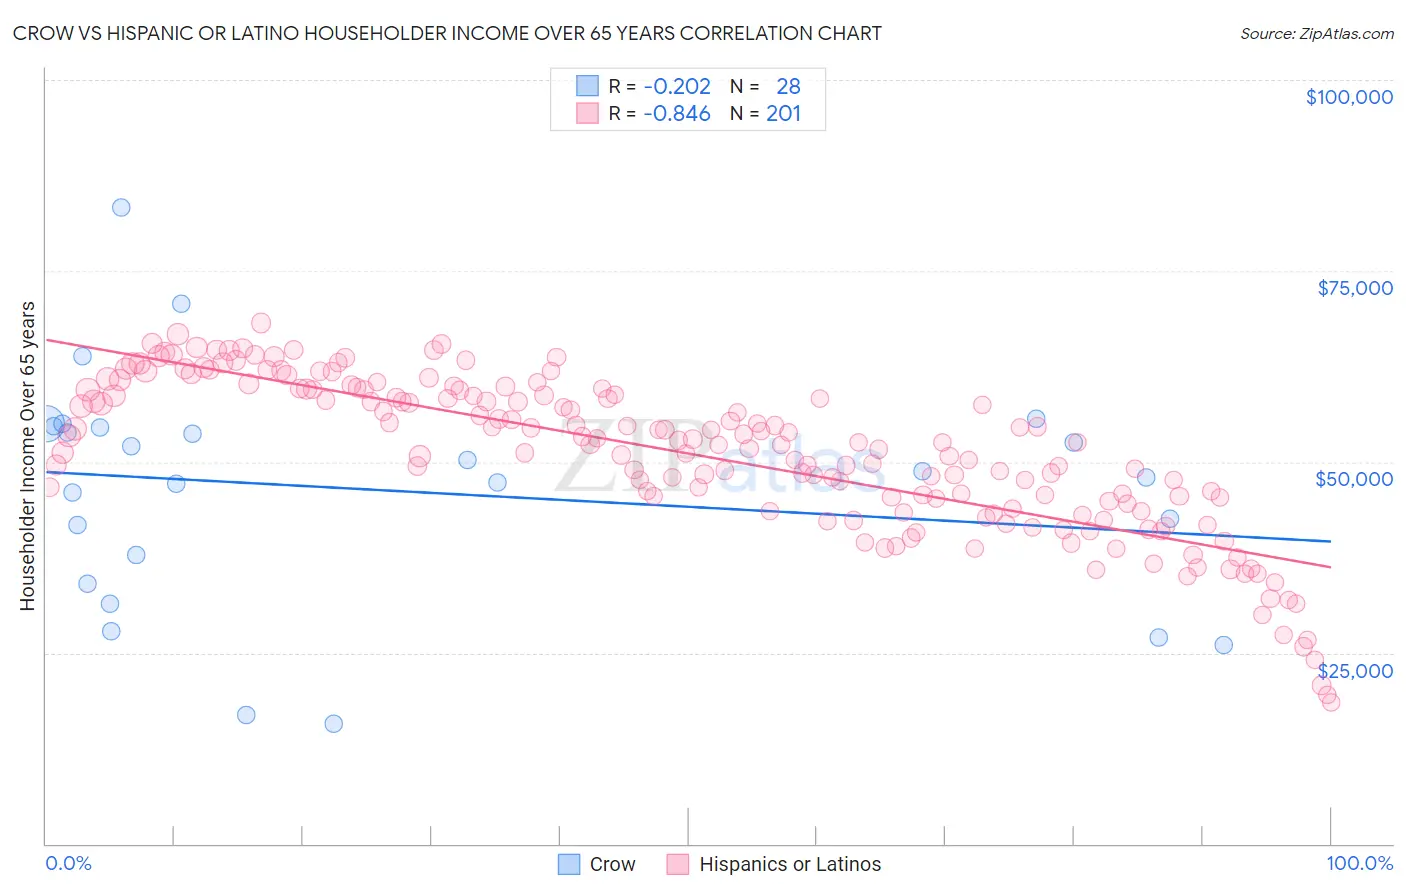 Crow vs Hispanic or Latino Householder Income Over 65 years